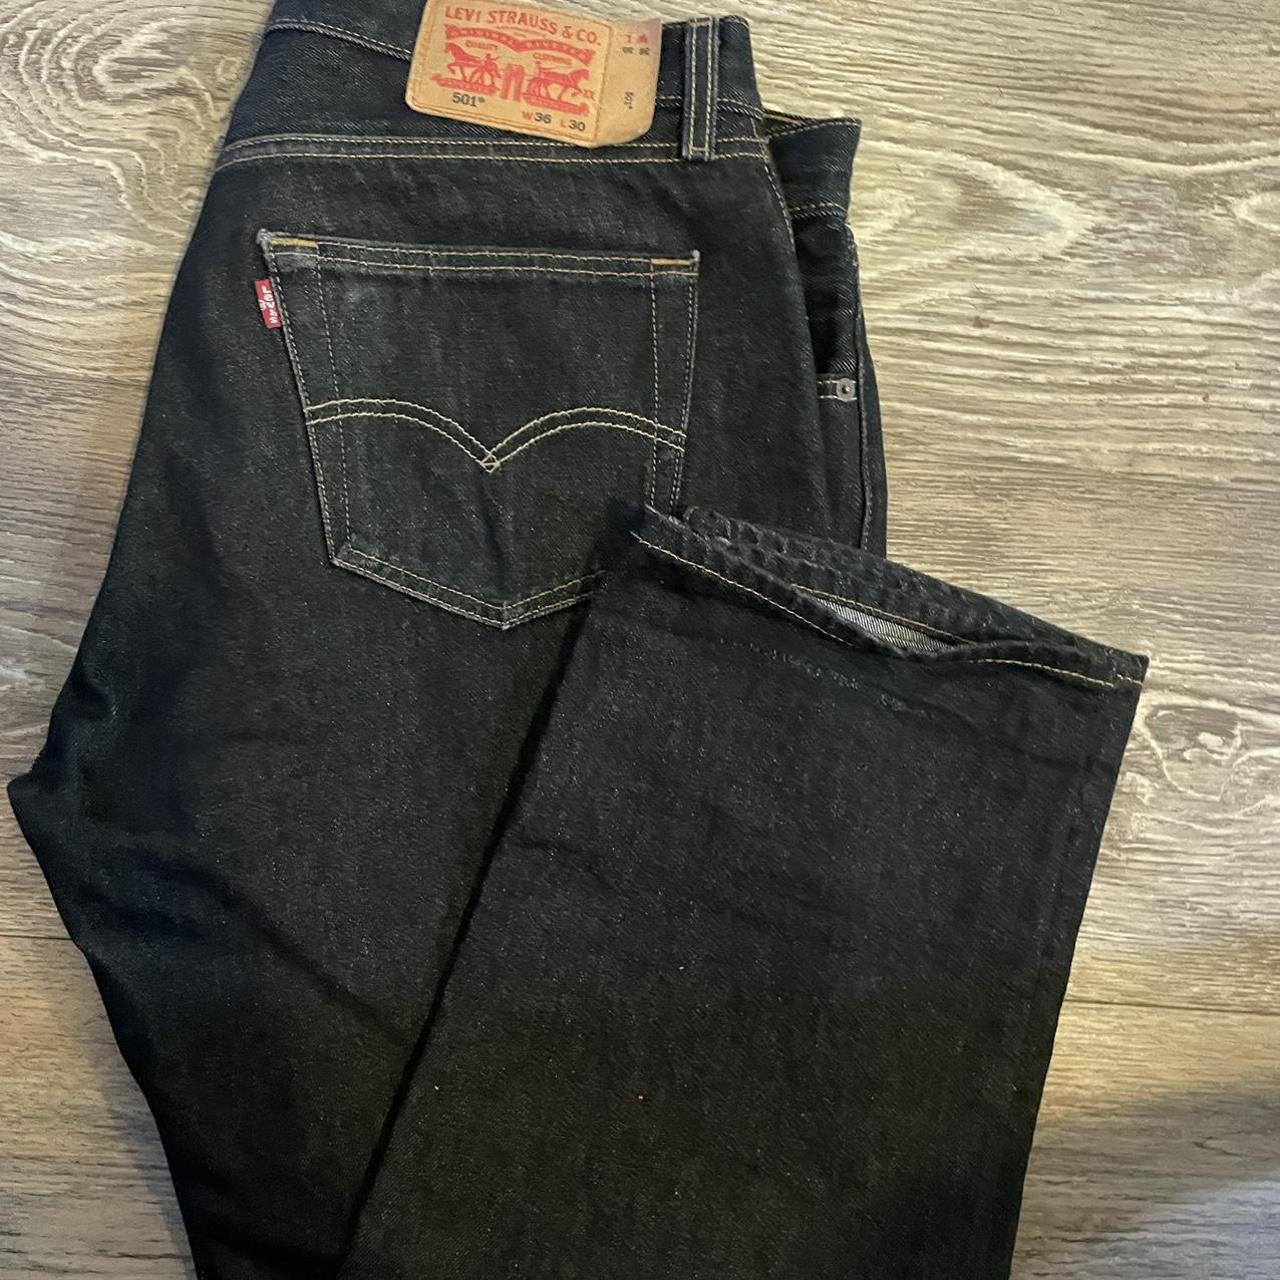 Black 501s pants - Depop